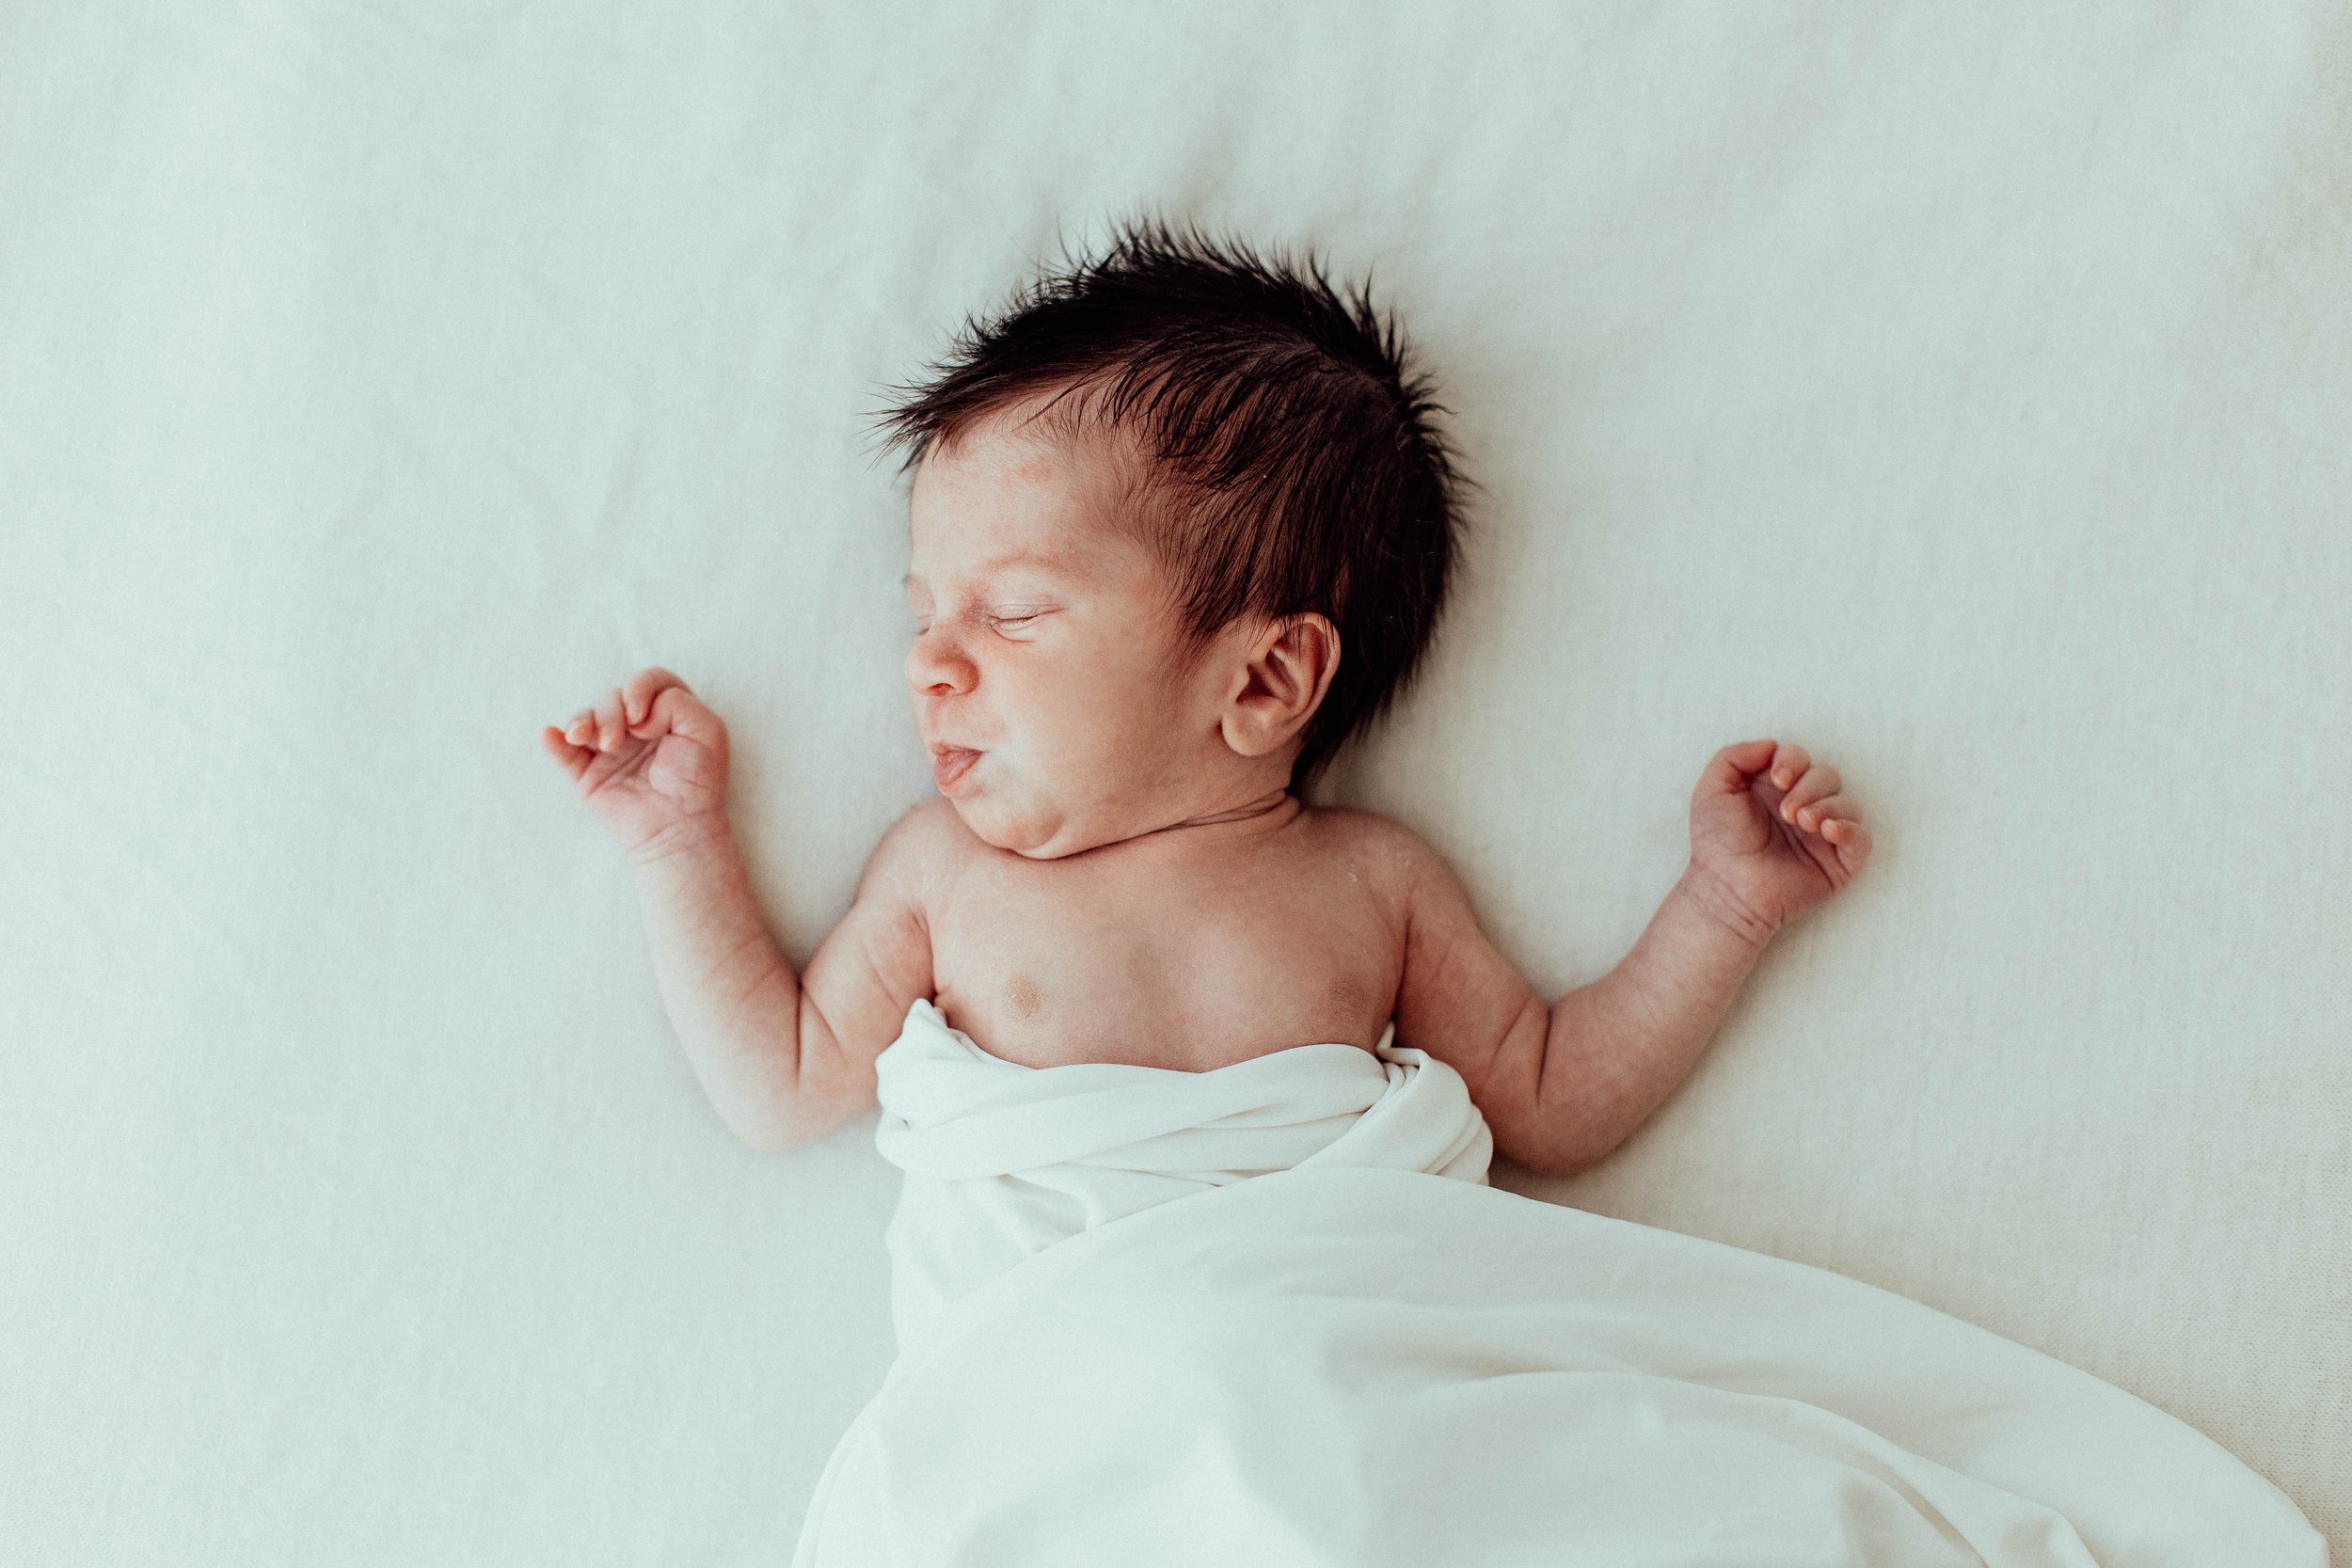 camden-newborn-photography-natural-light-lifestyle-leo-newborn-25.jpg